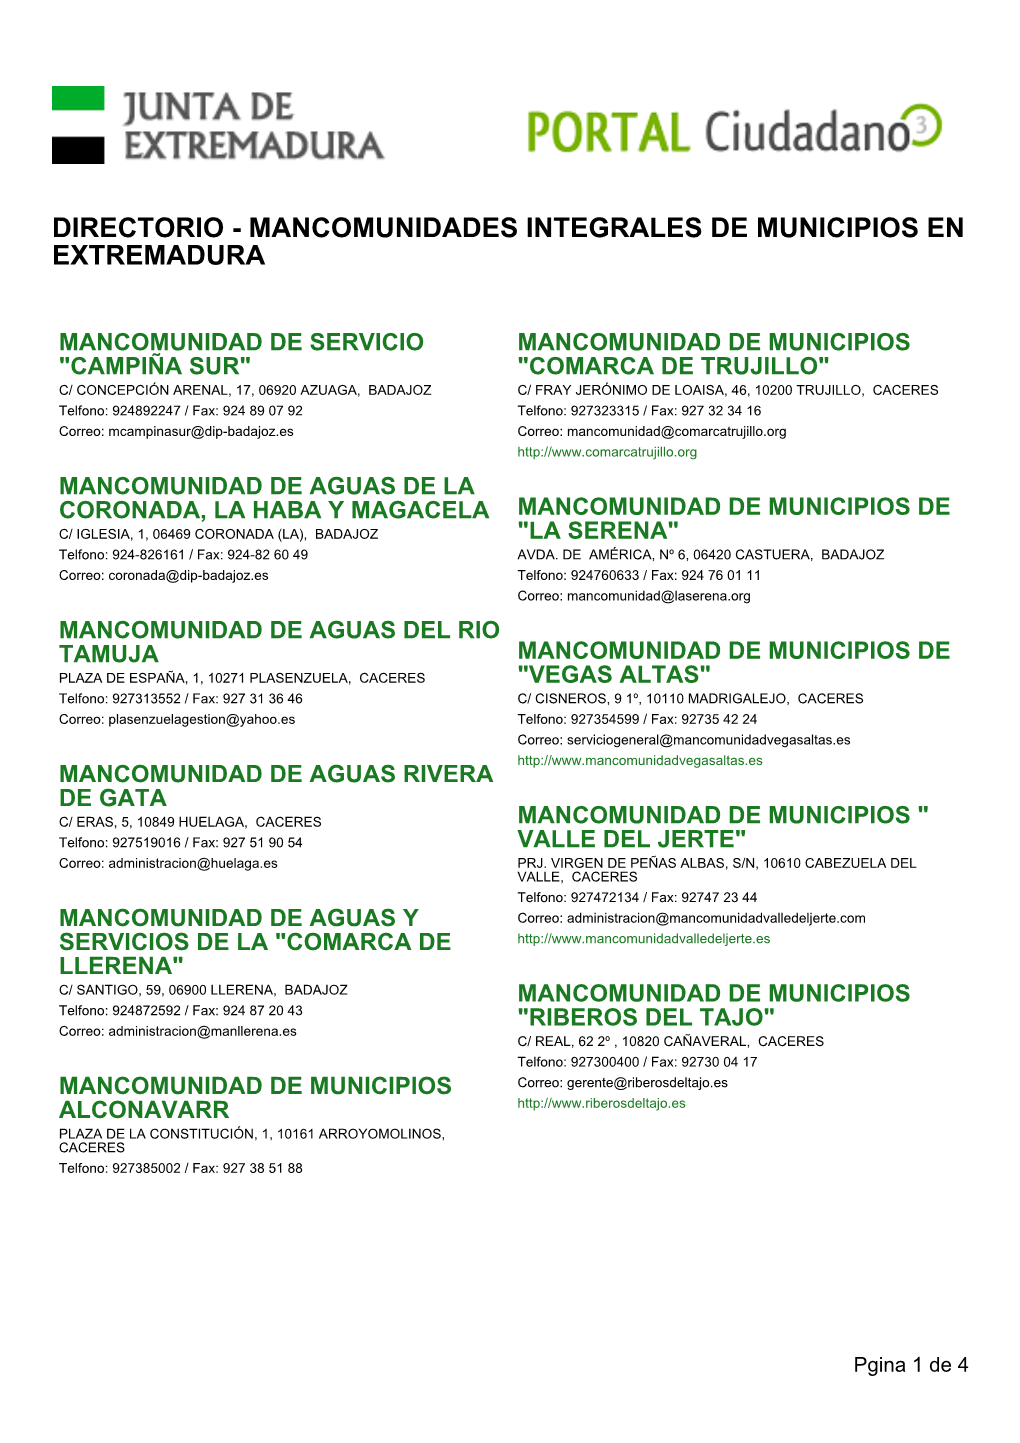 Mancomunidades Integrales De Municipios En Extremadura